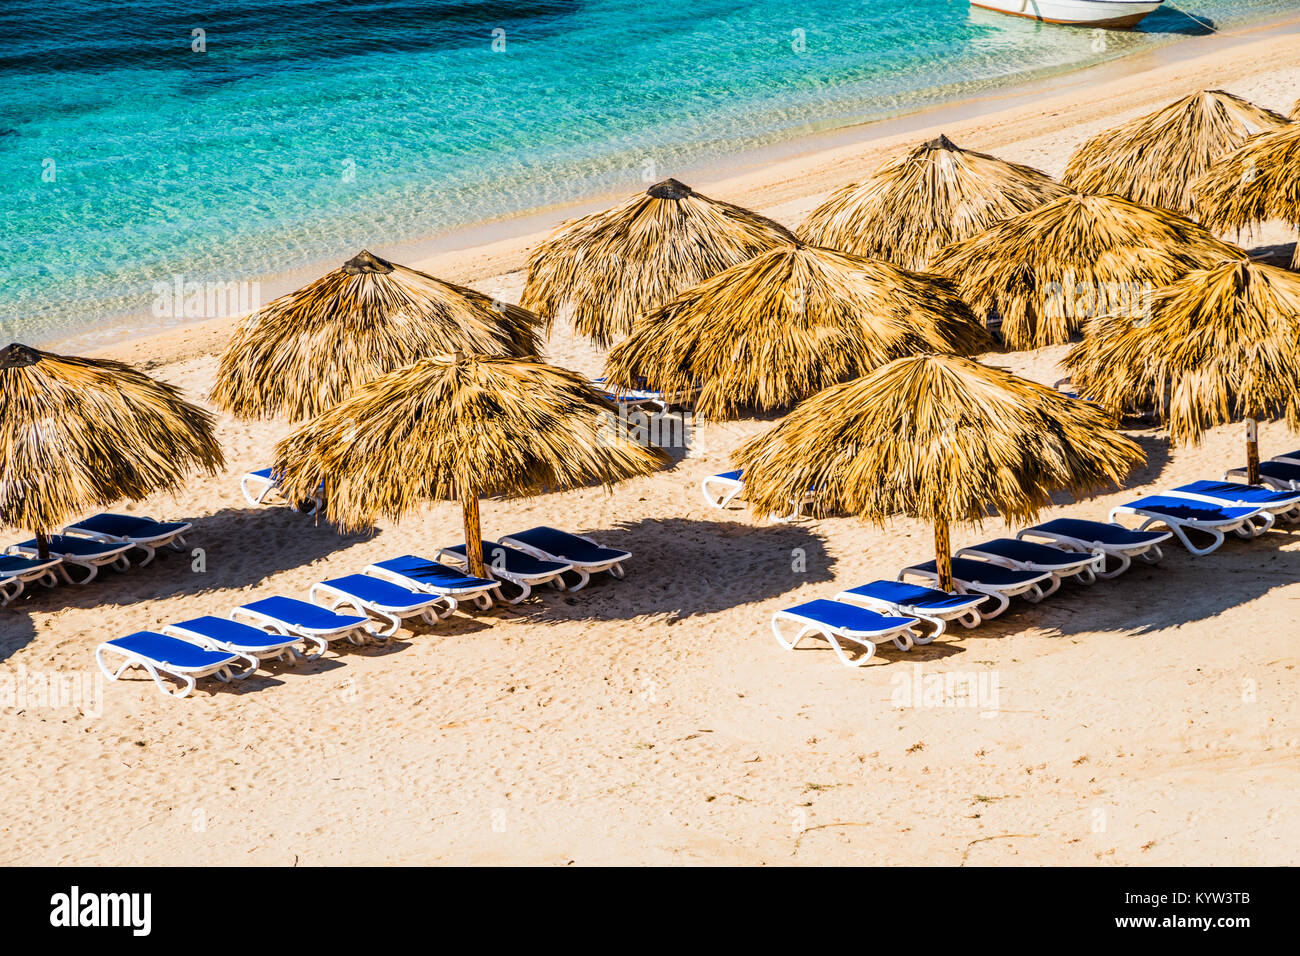 Amazing view of a paradisiac beach in Playa Ancon, palm trees, translucent blue water, straw umbrellas, sun. Stock Photo